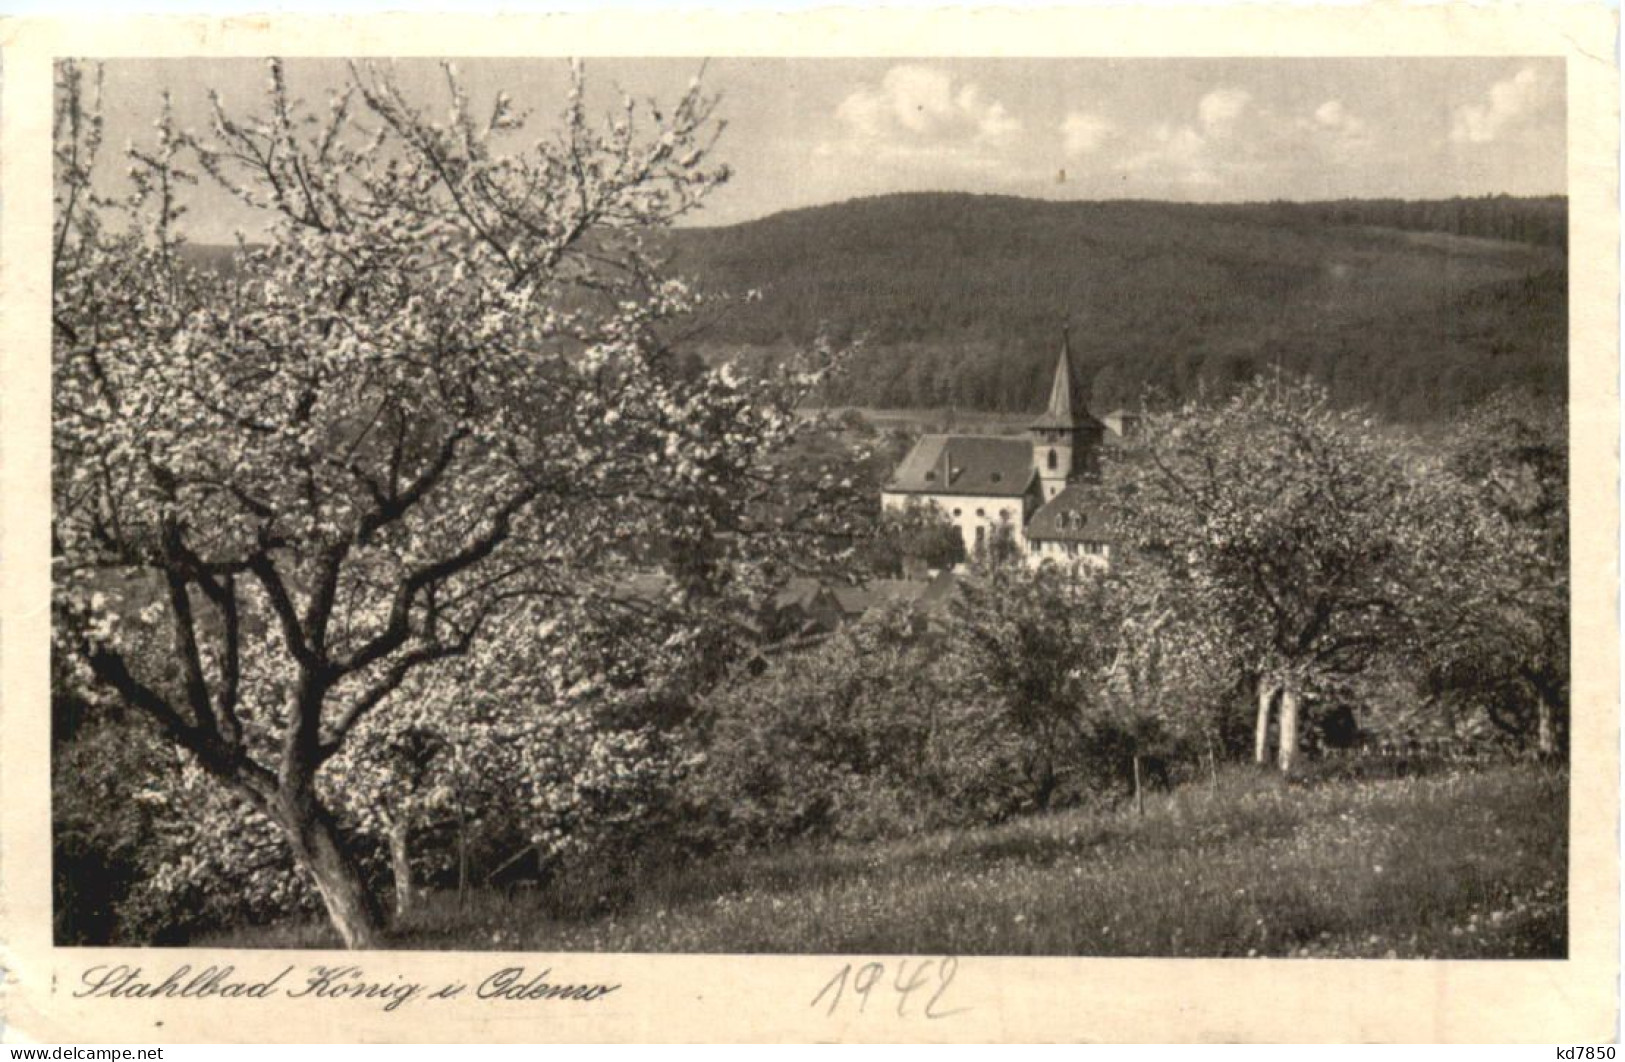 Stahlbad König Im Odenwald - Bad Koenig